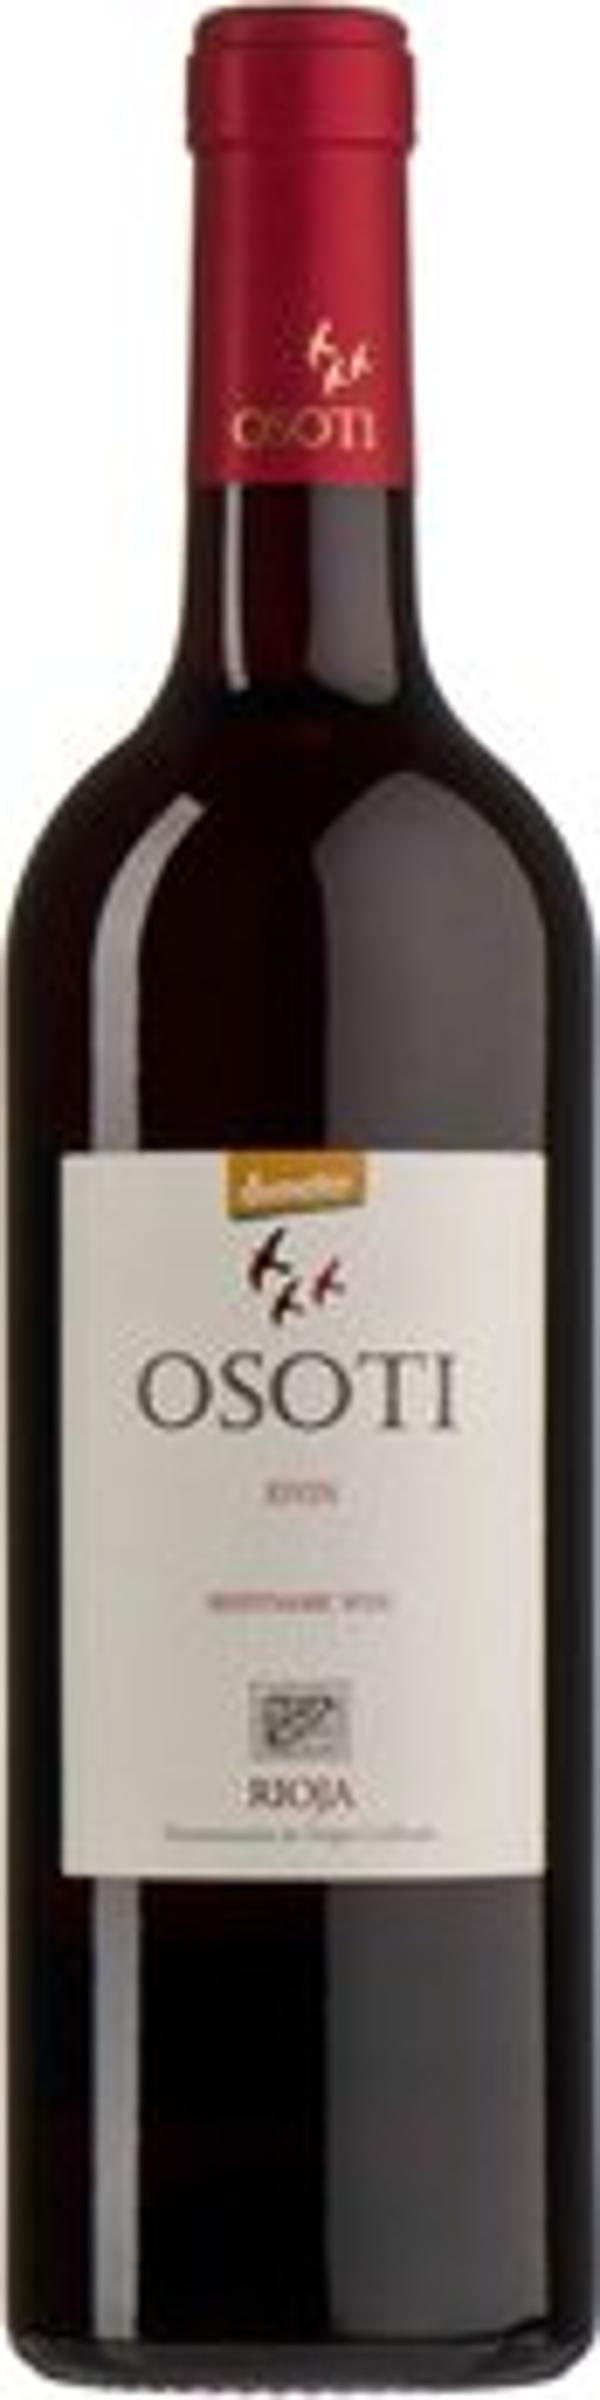 Produktfoto zu Osoti Rioja